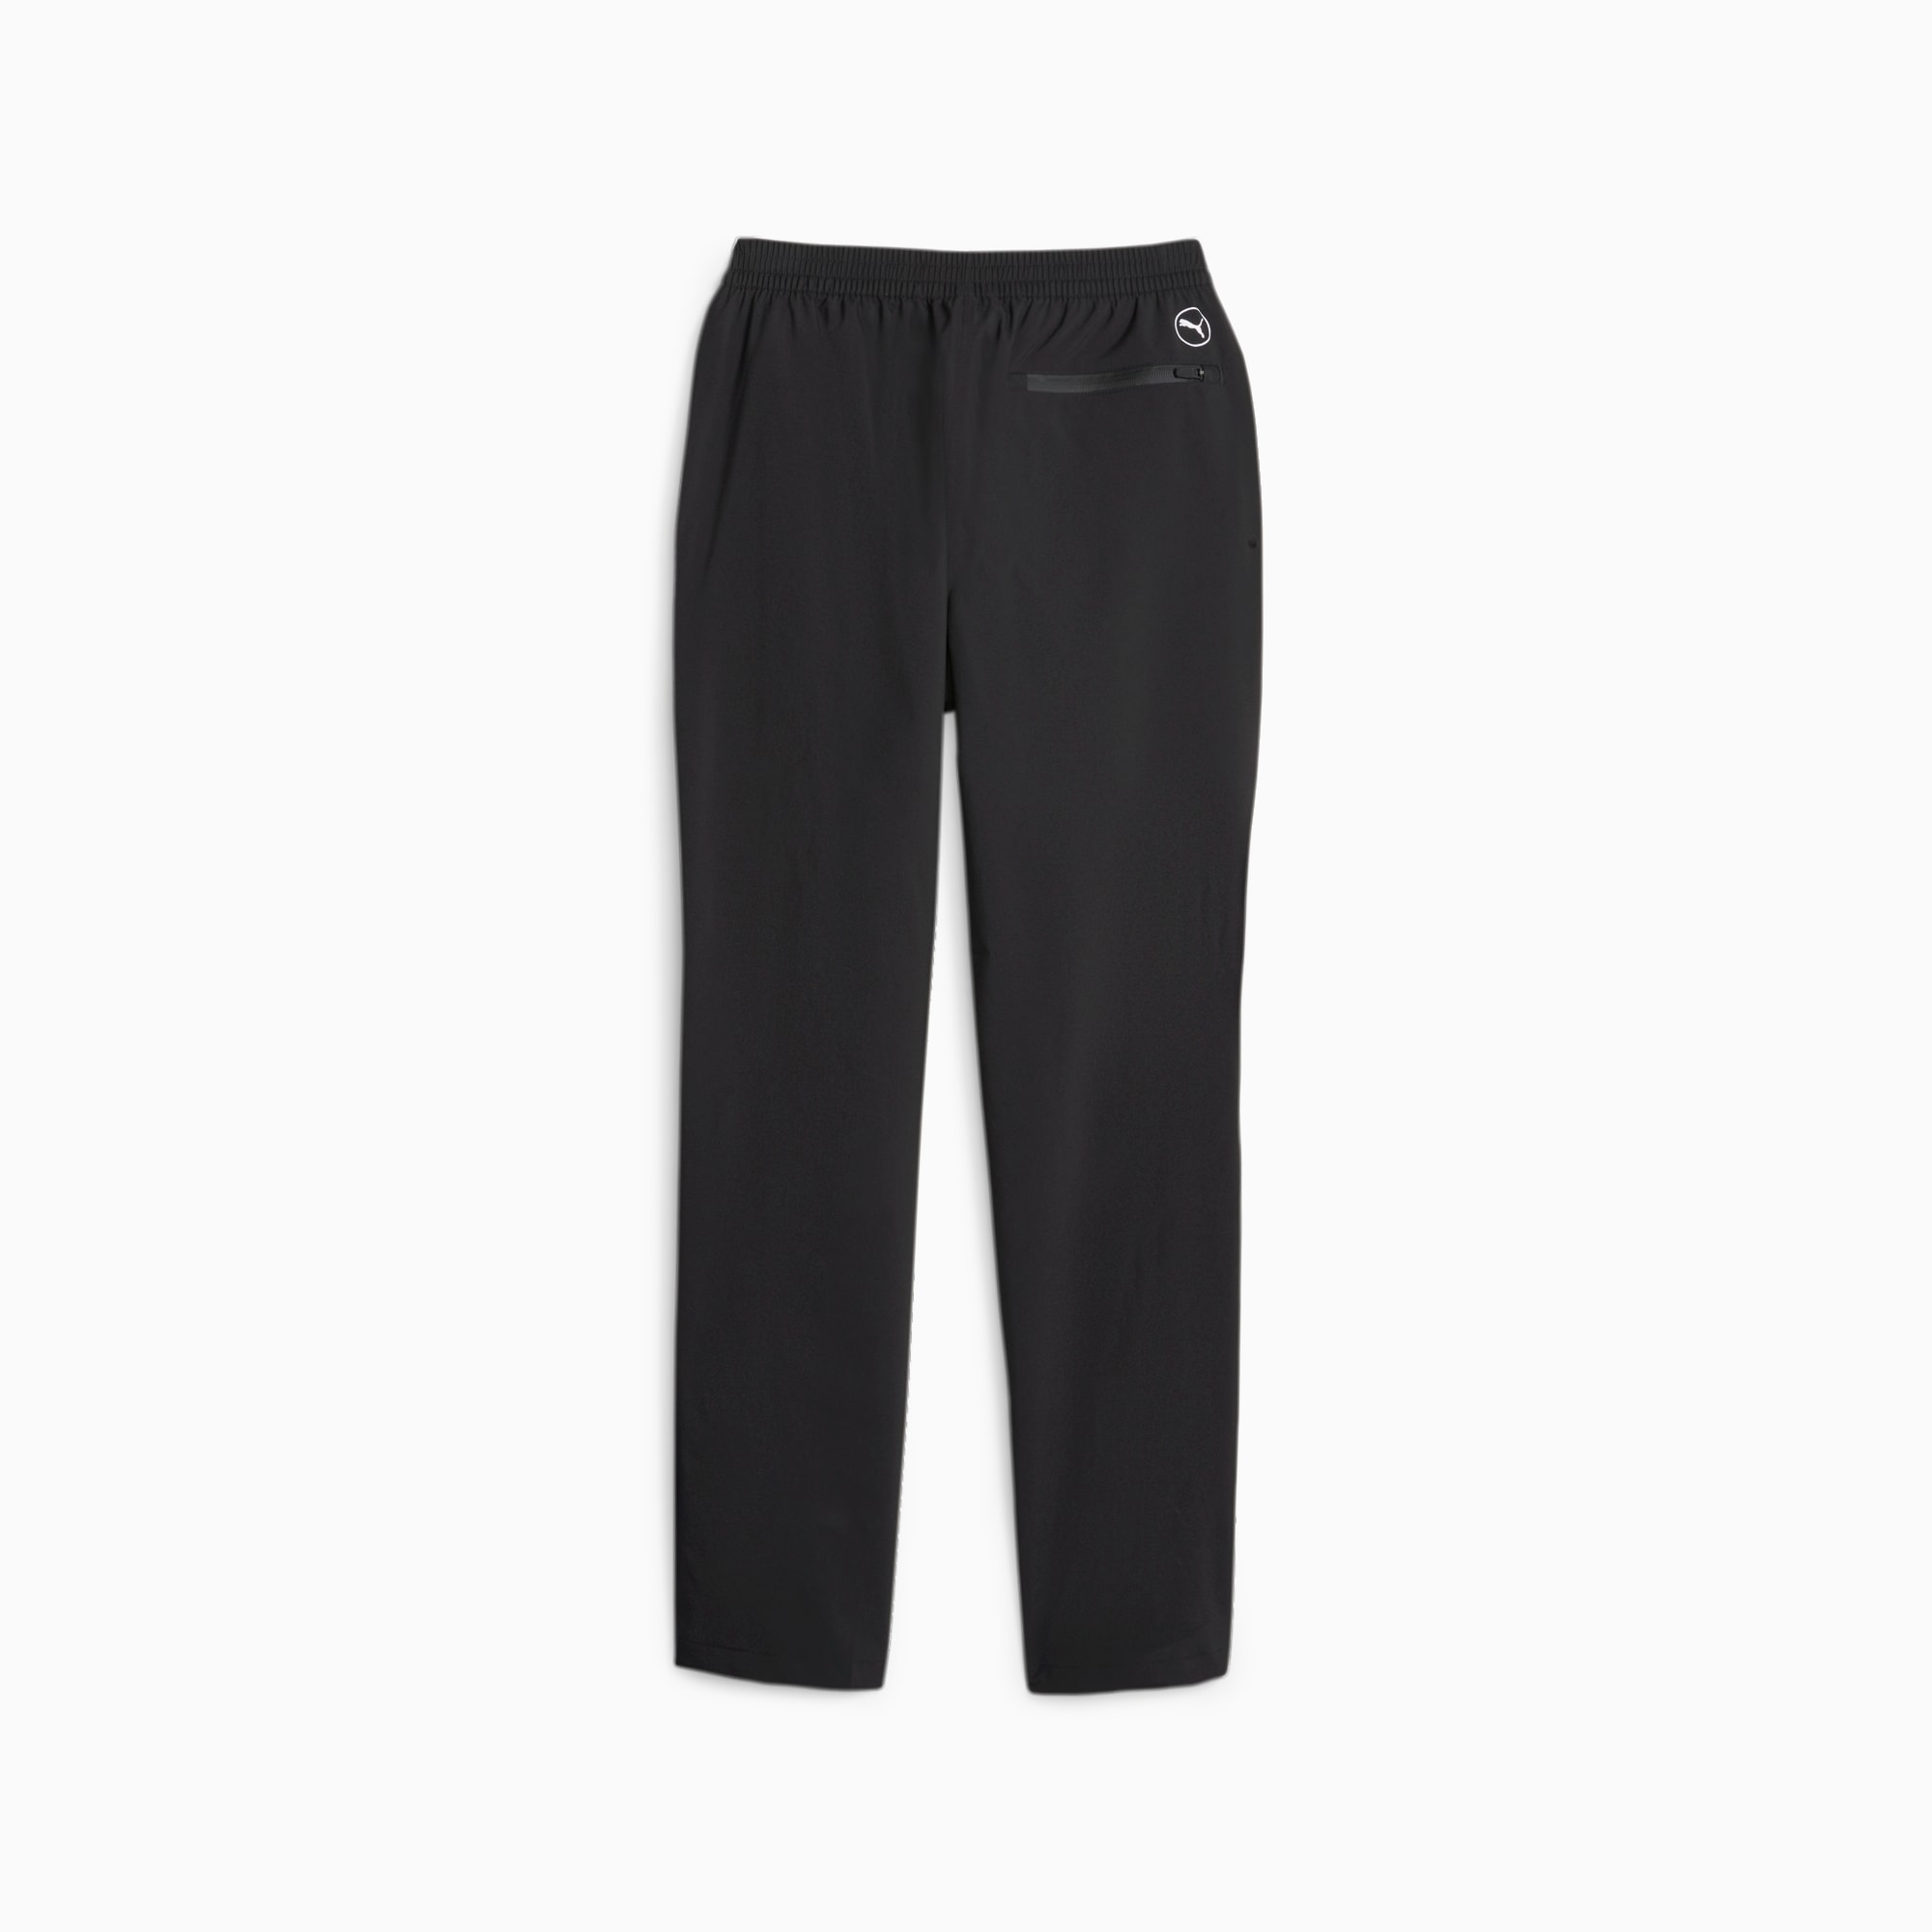 PUMA Drylbl Men's Rain Pants, Black, Size L/L, Clothing